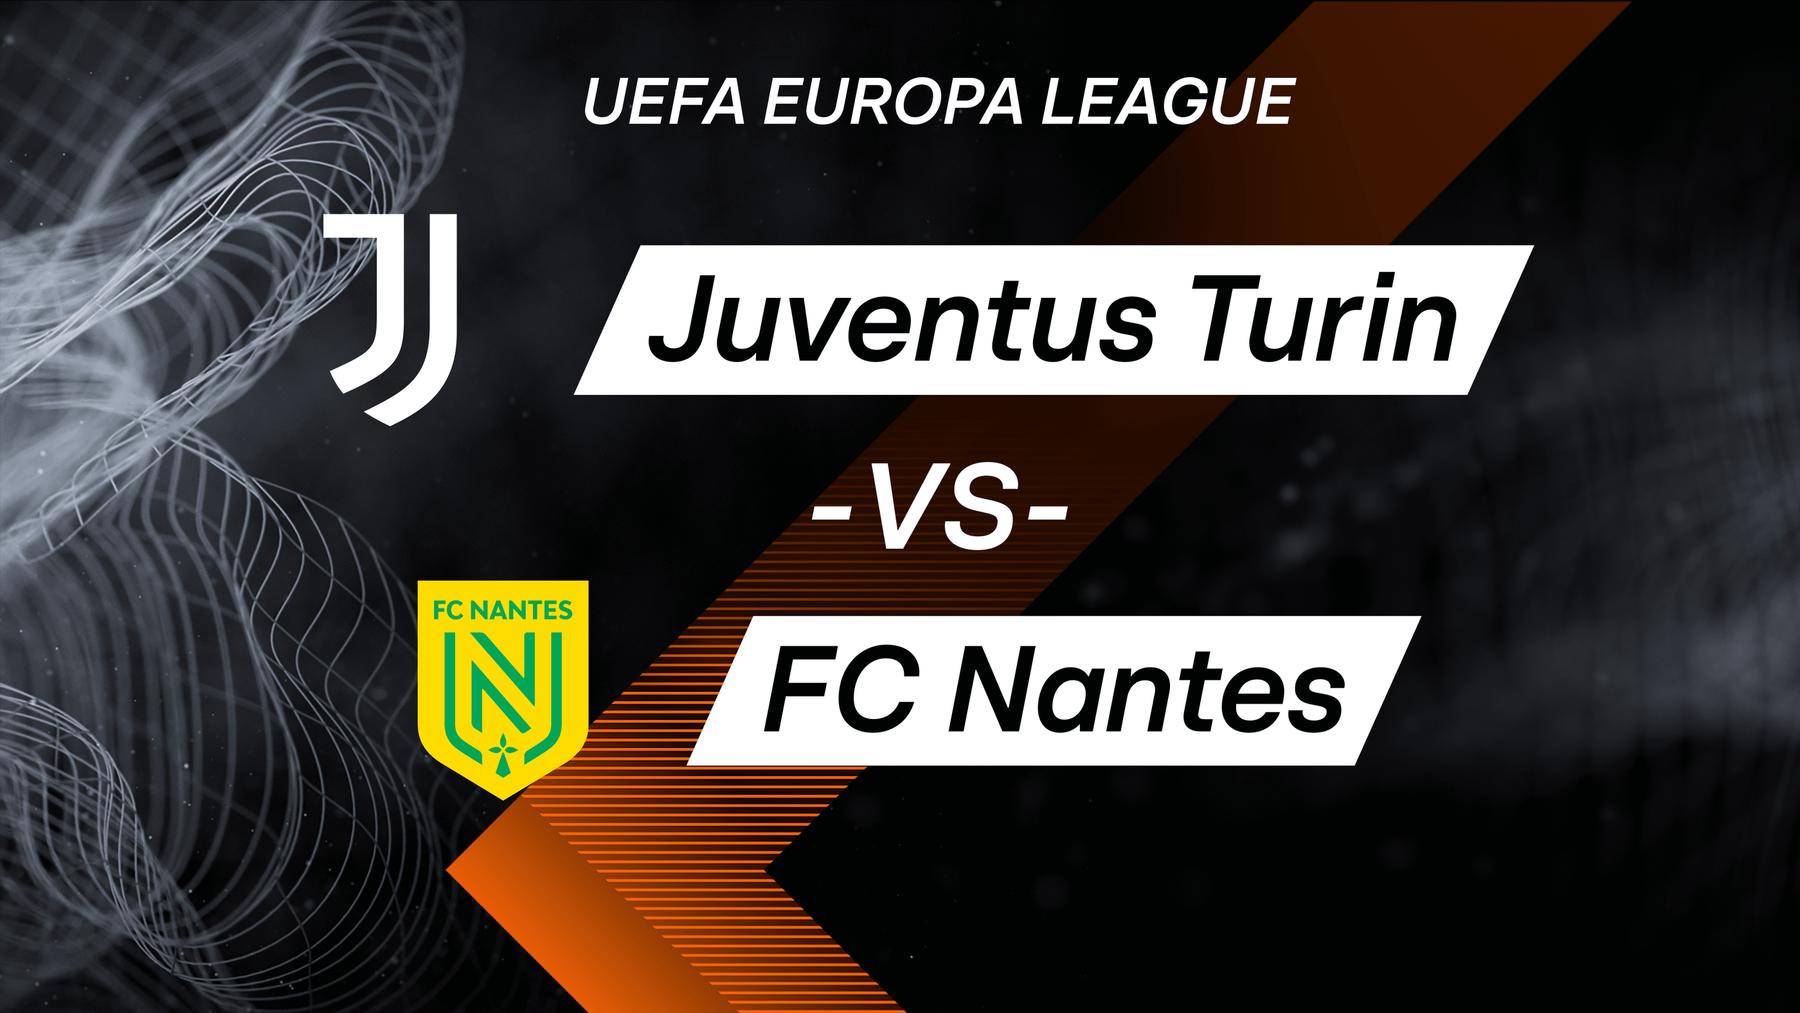 Juventus Turin vs. FC Nantes